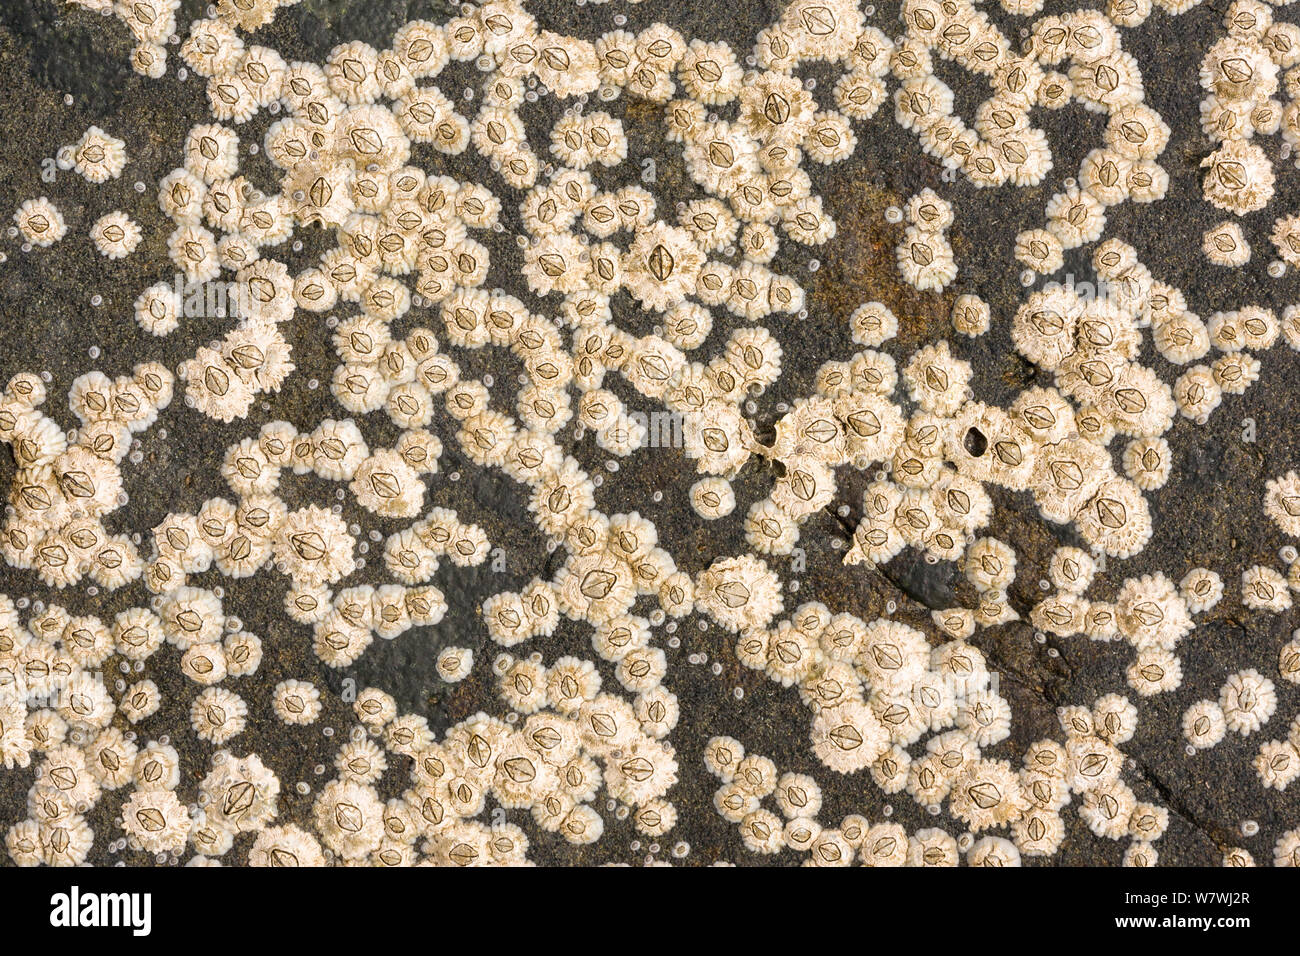 Acorn barnacles (Balanus balanoides) im rockpool, Northumberland, England, UK, Mai. Stockfoto